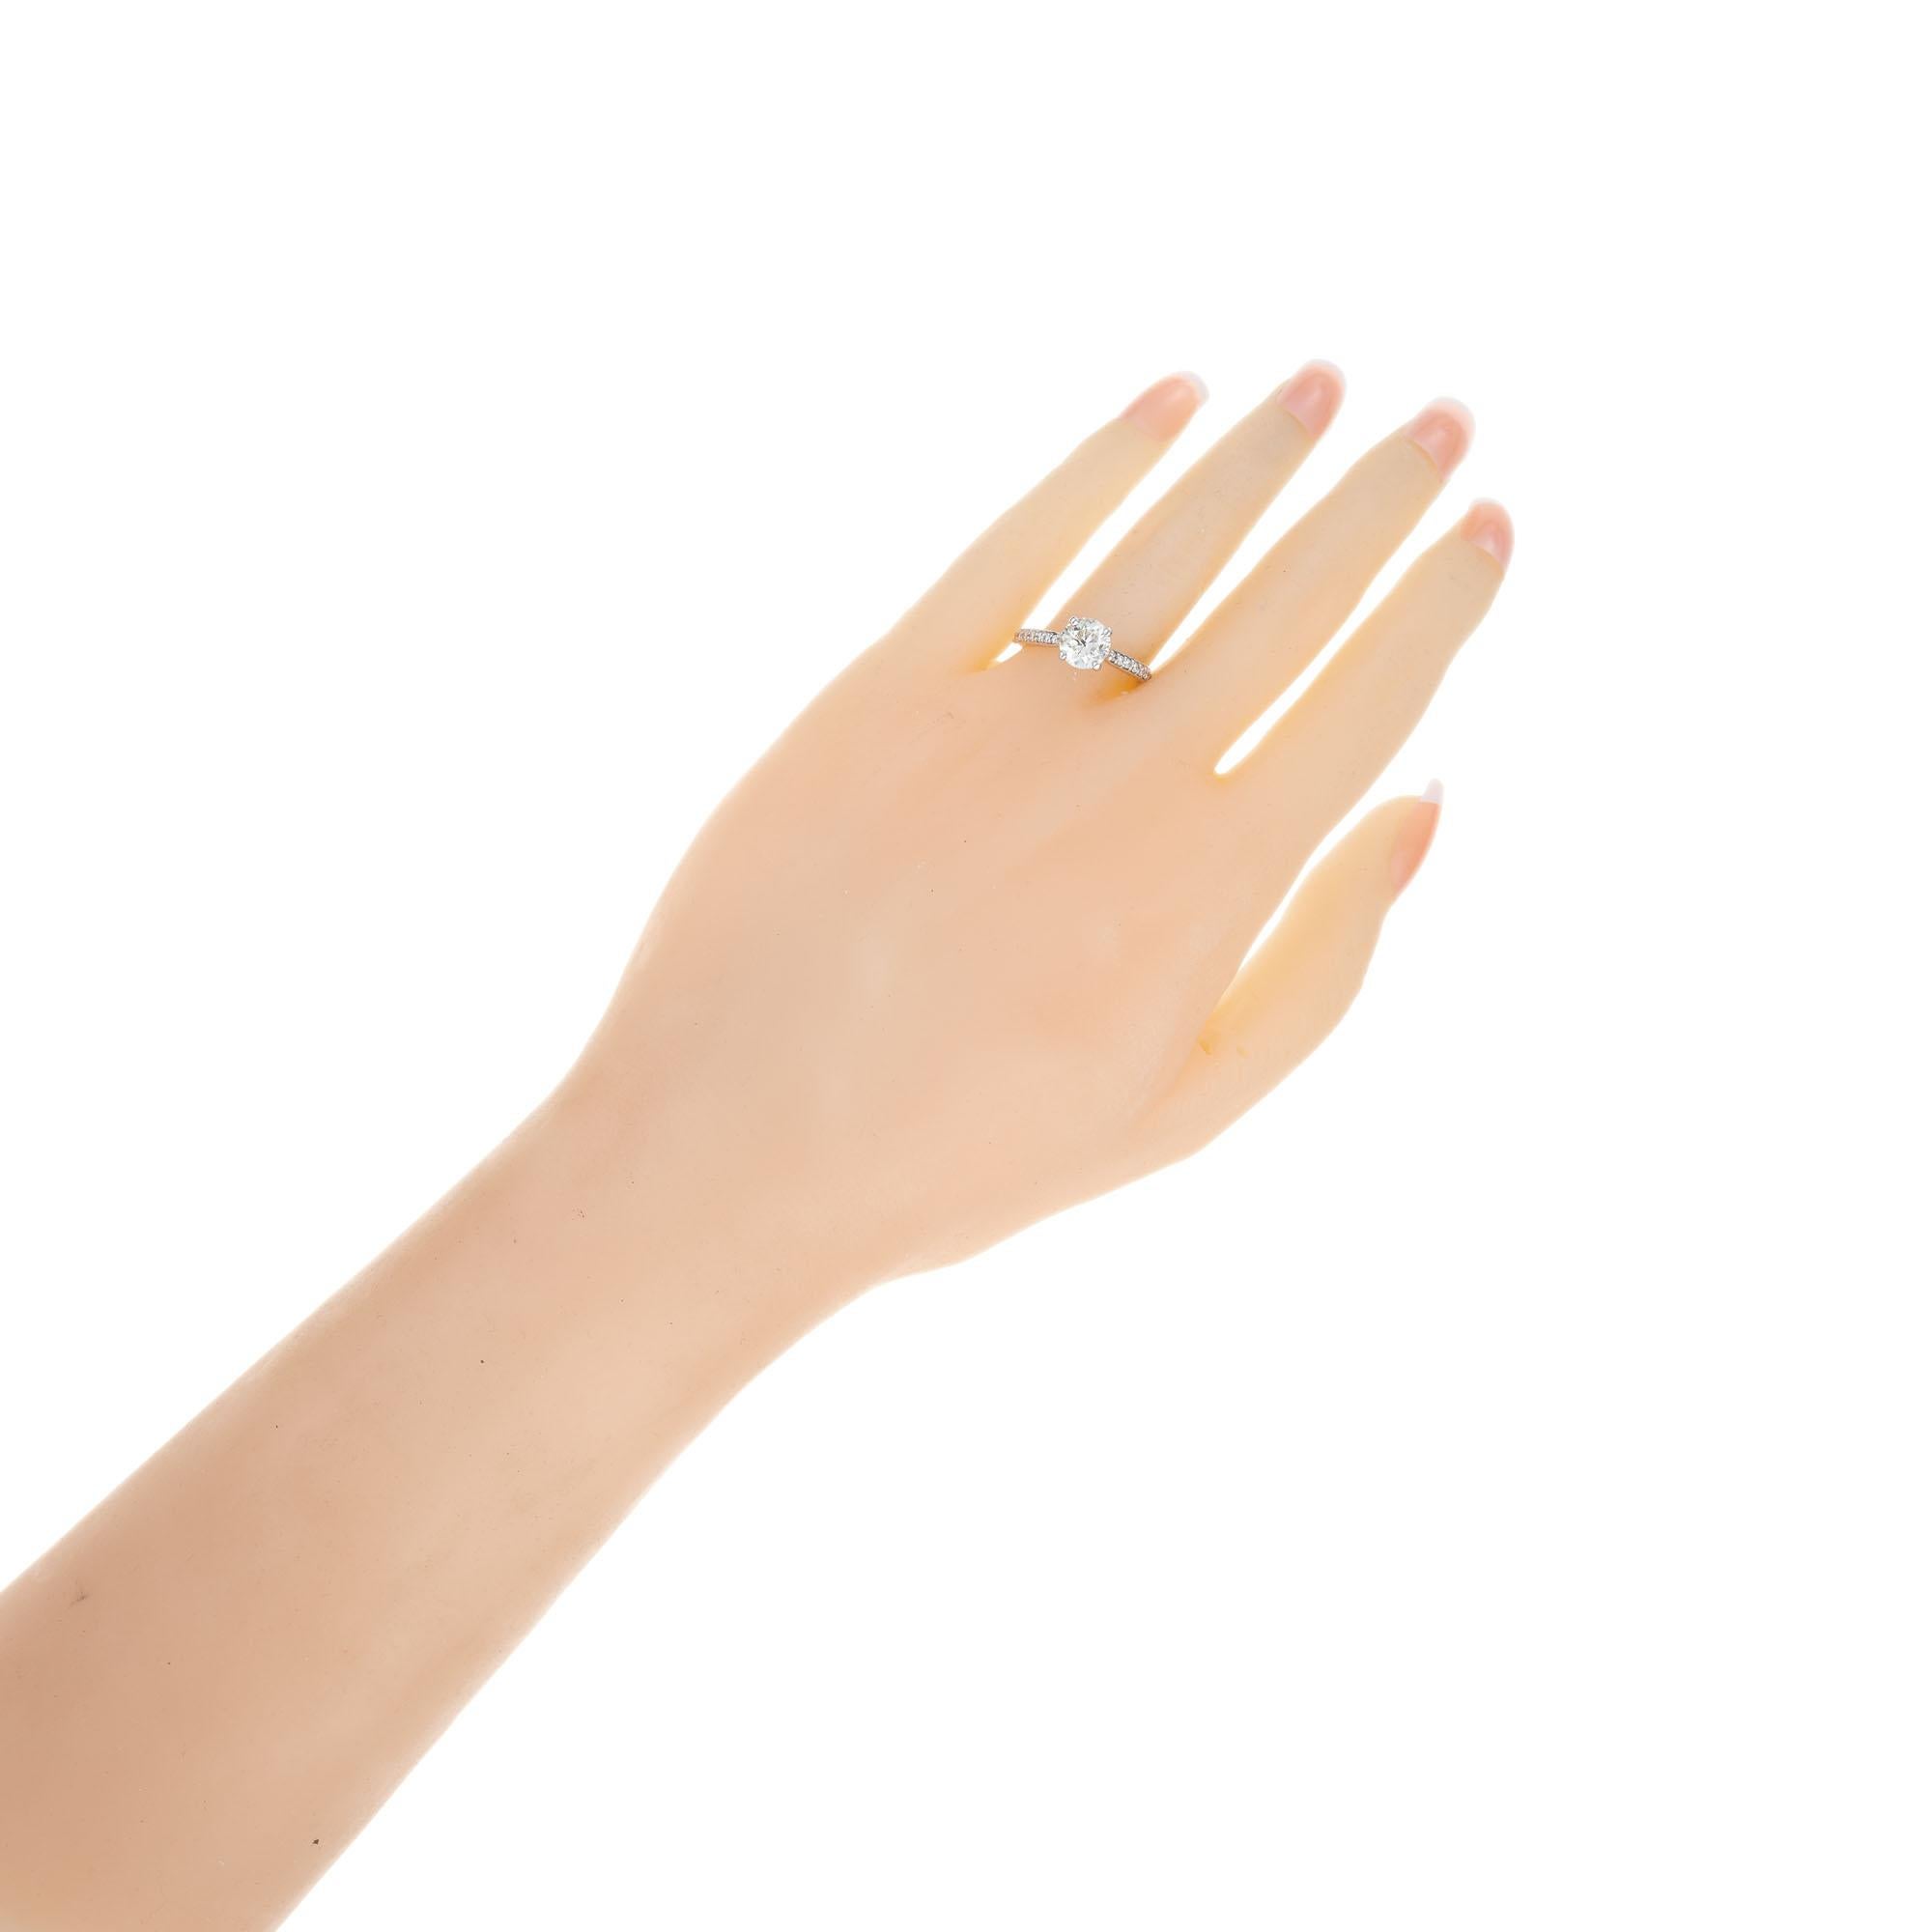 Peter Suchy EGL Certified 1.19 Carat Diamond Platinum Engagement Ring For Sale 1